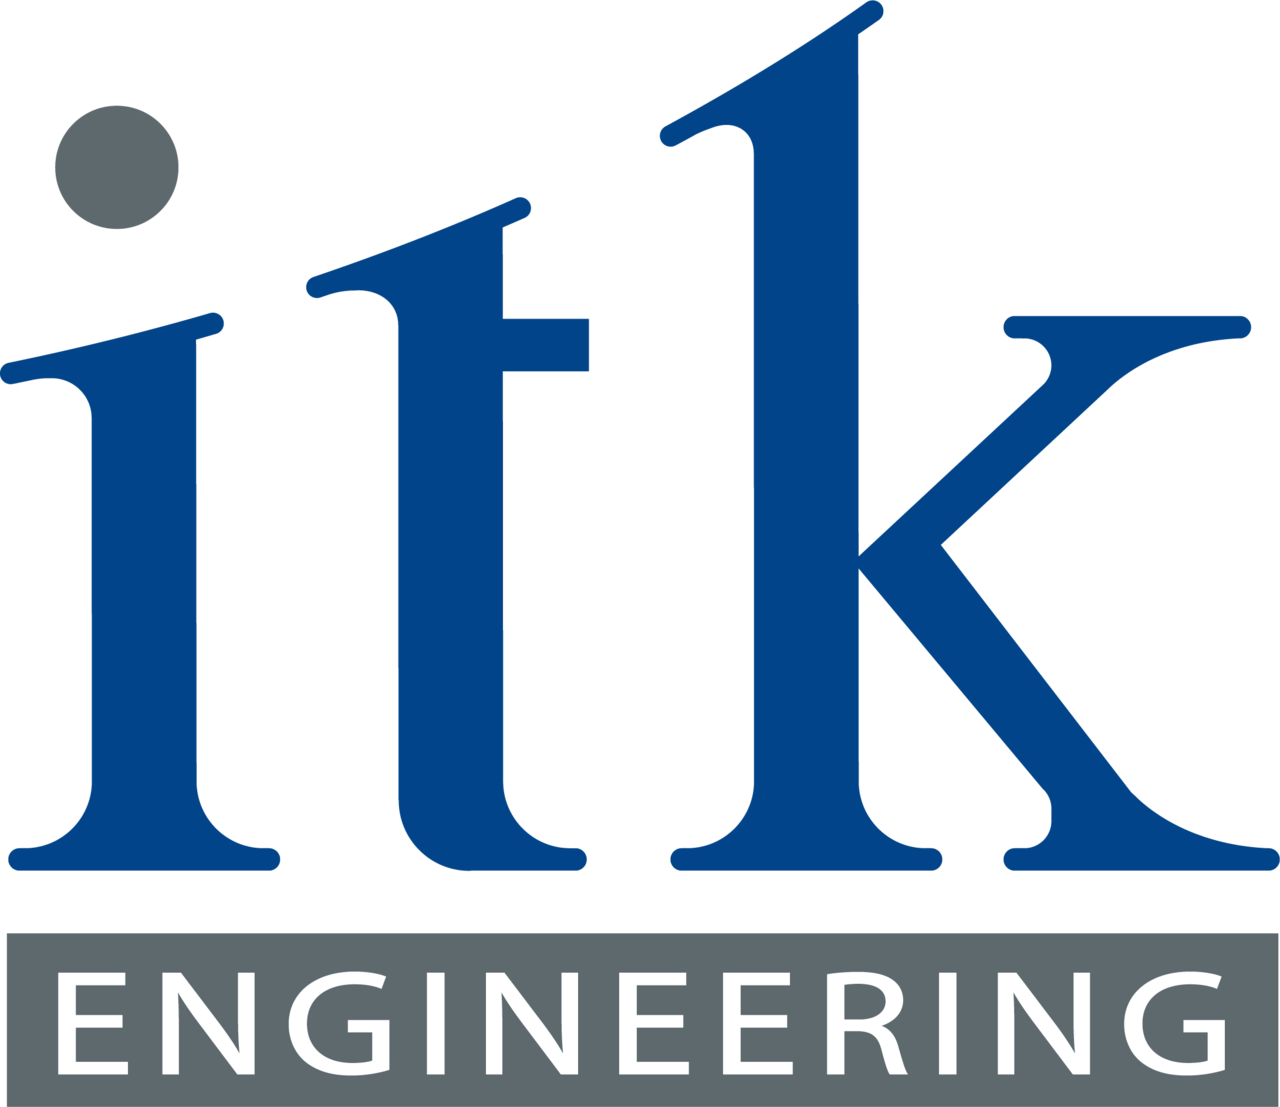 ITK - Engineering GmbH becomes a regular member of CharIN